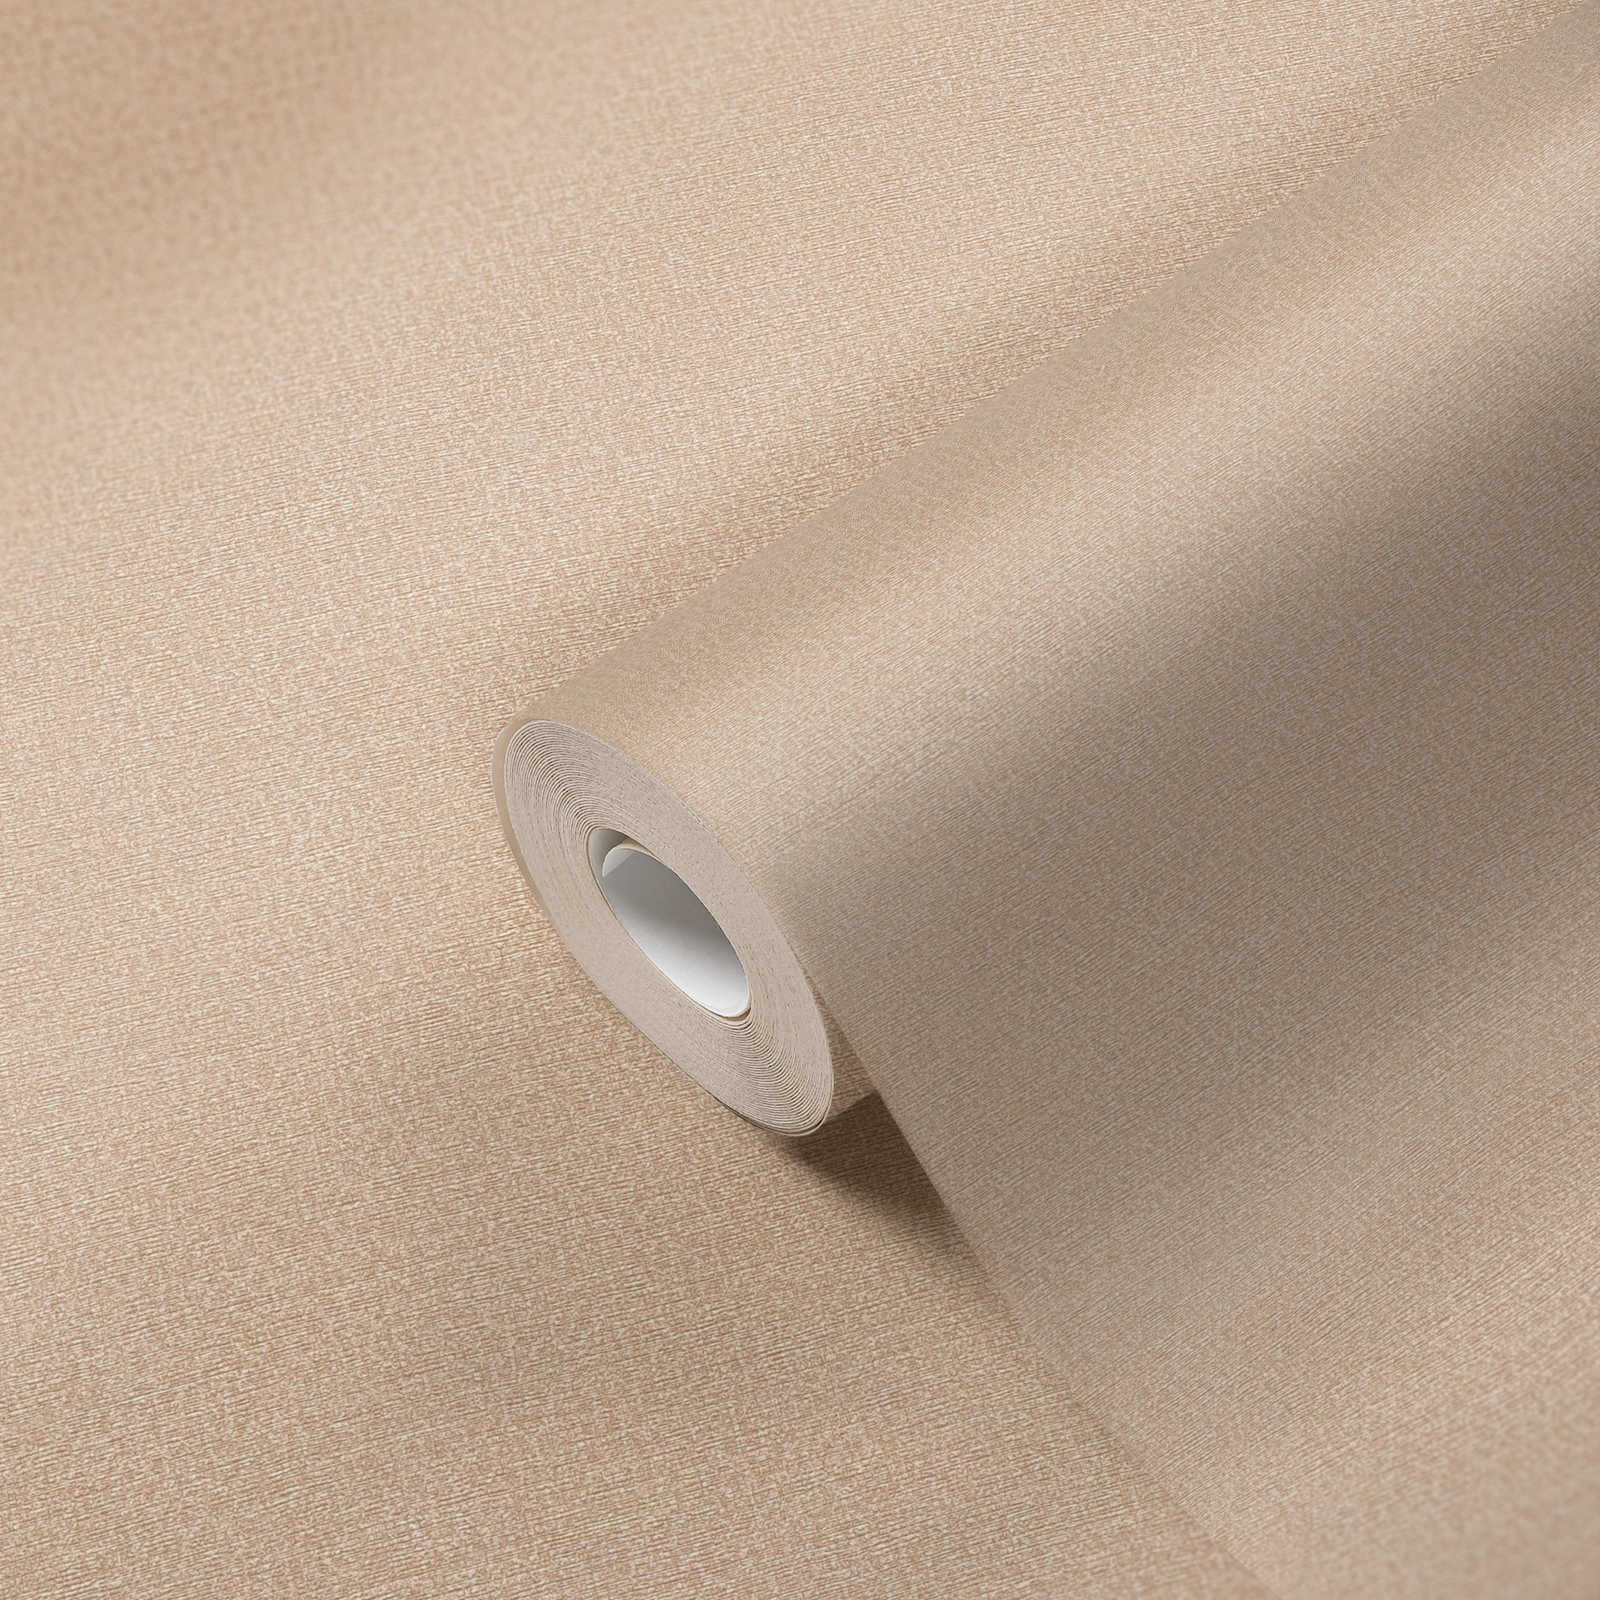             Carta da parati in tessuto non tessuto senza PVC con motivo a pois lucido - beige
        